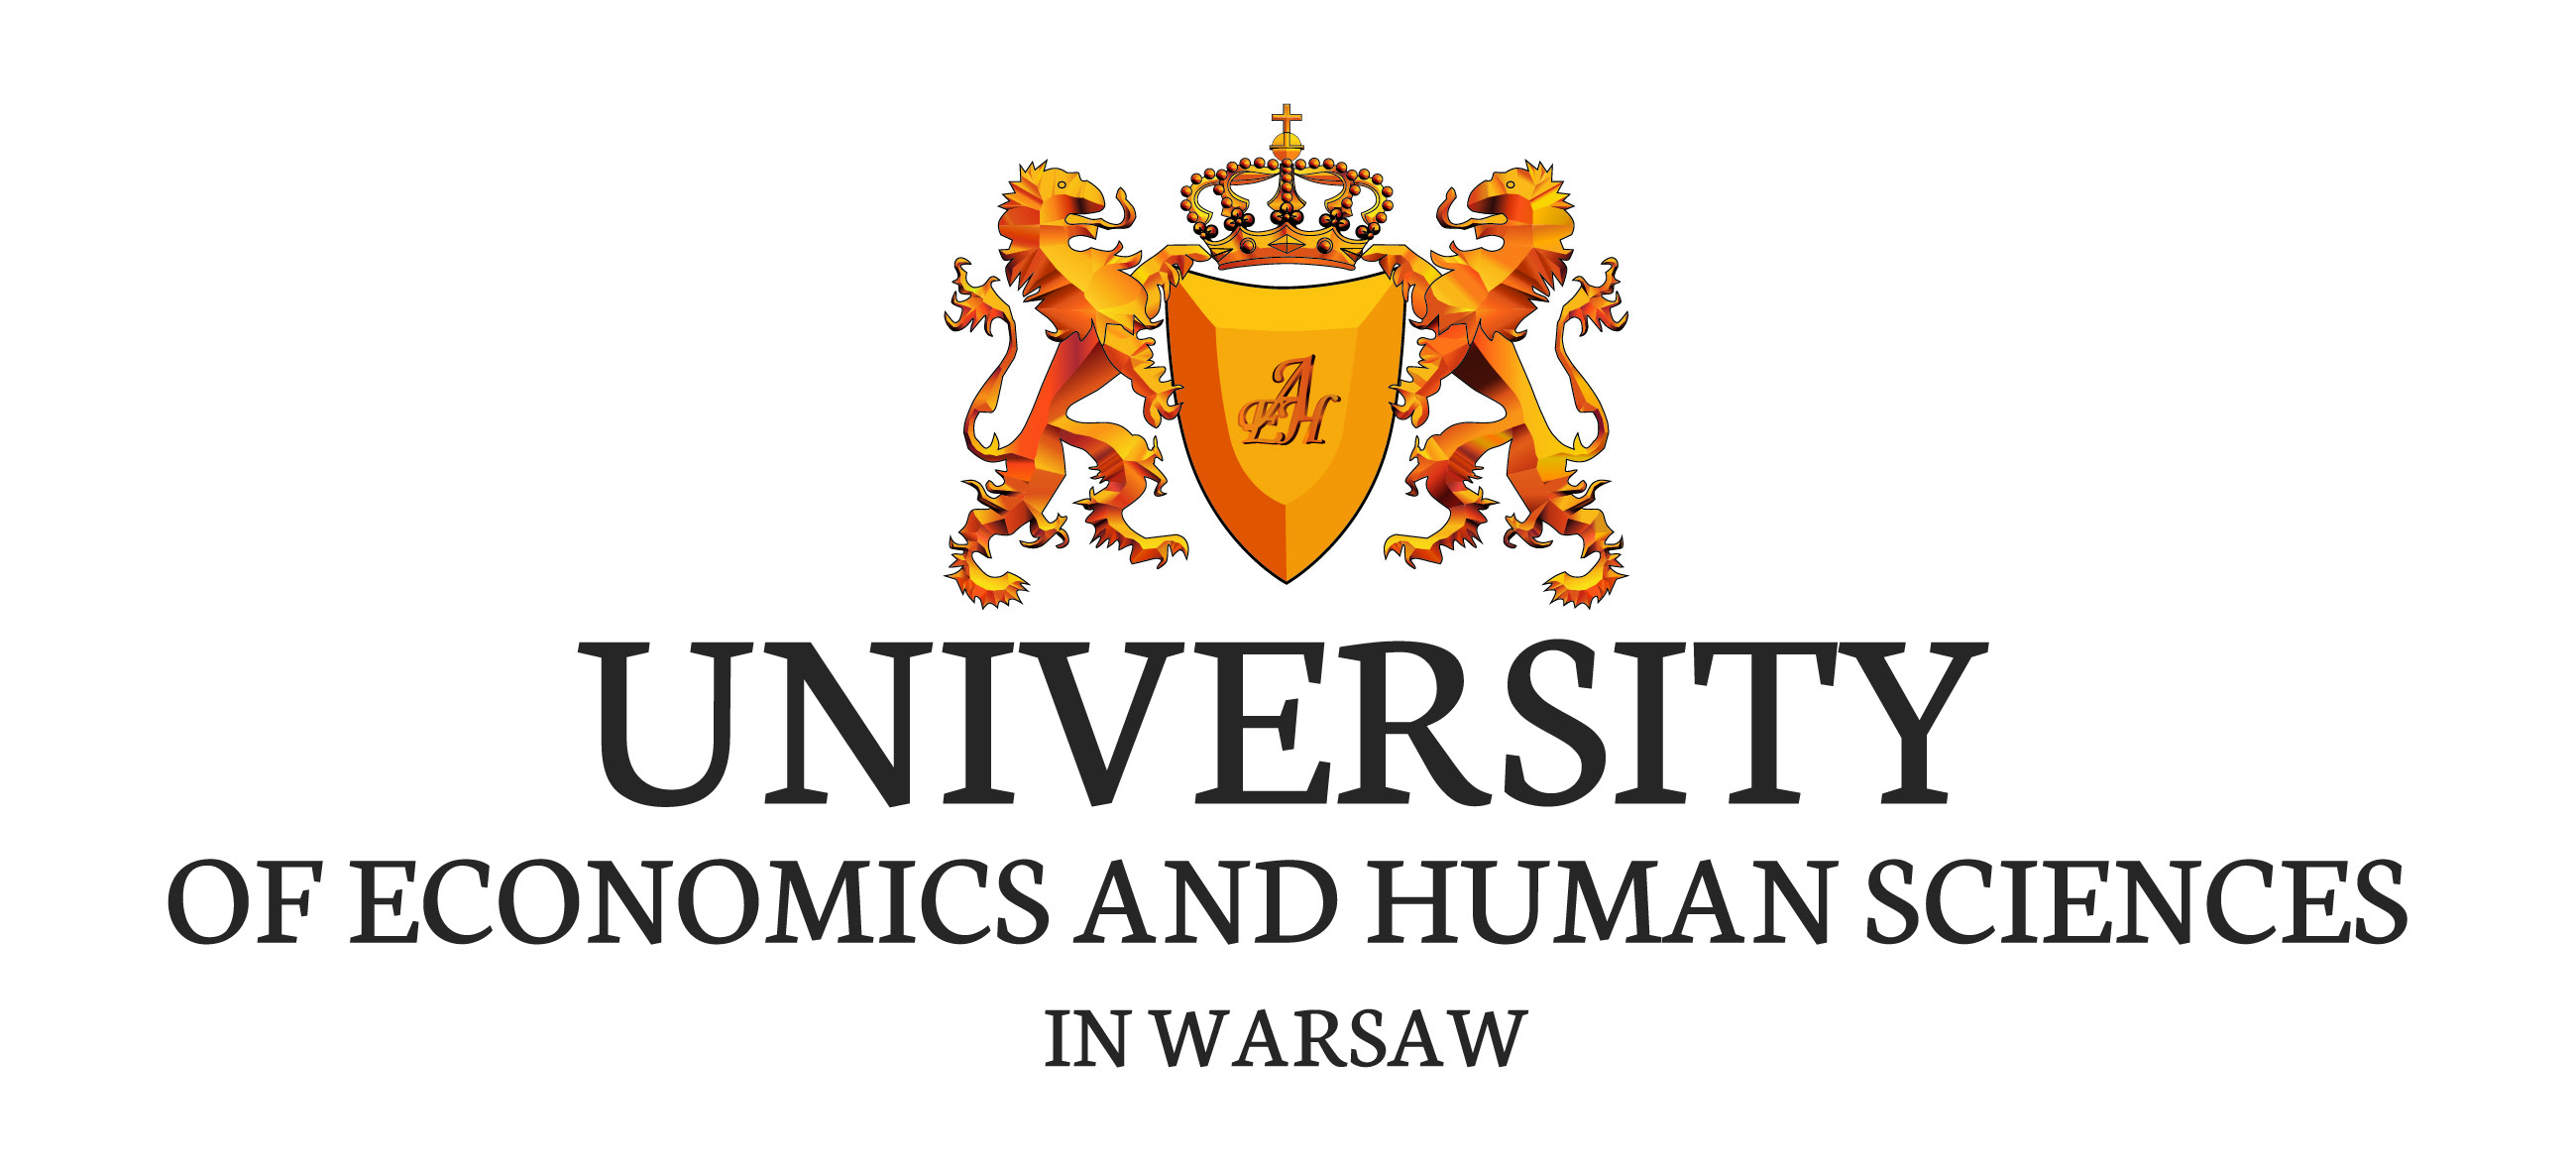 University of Economics and Human Sciences Warsaw Poland